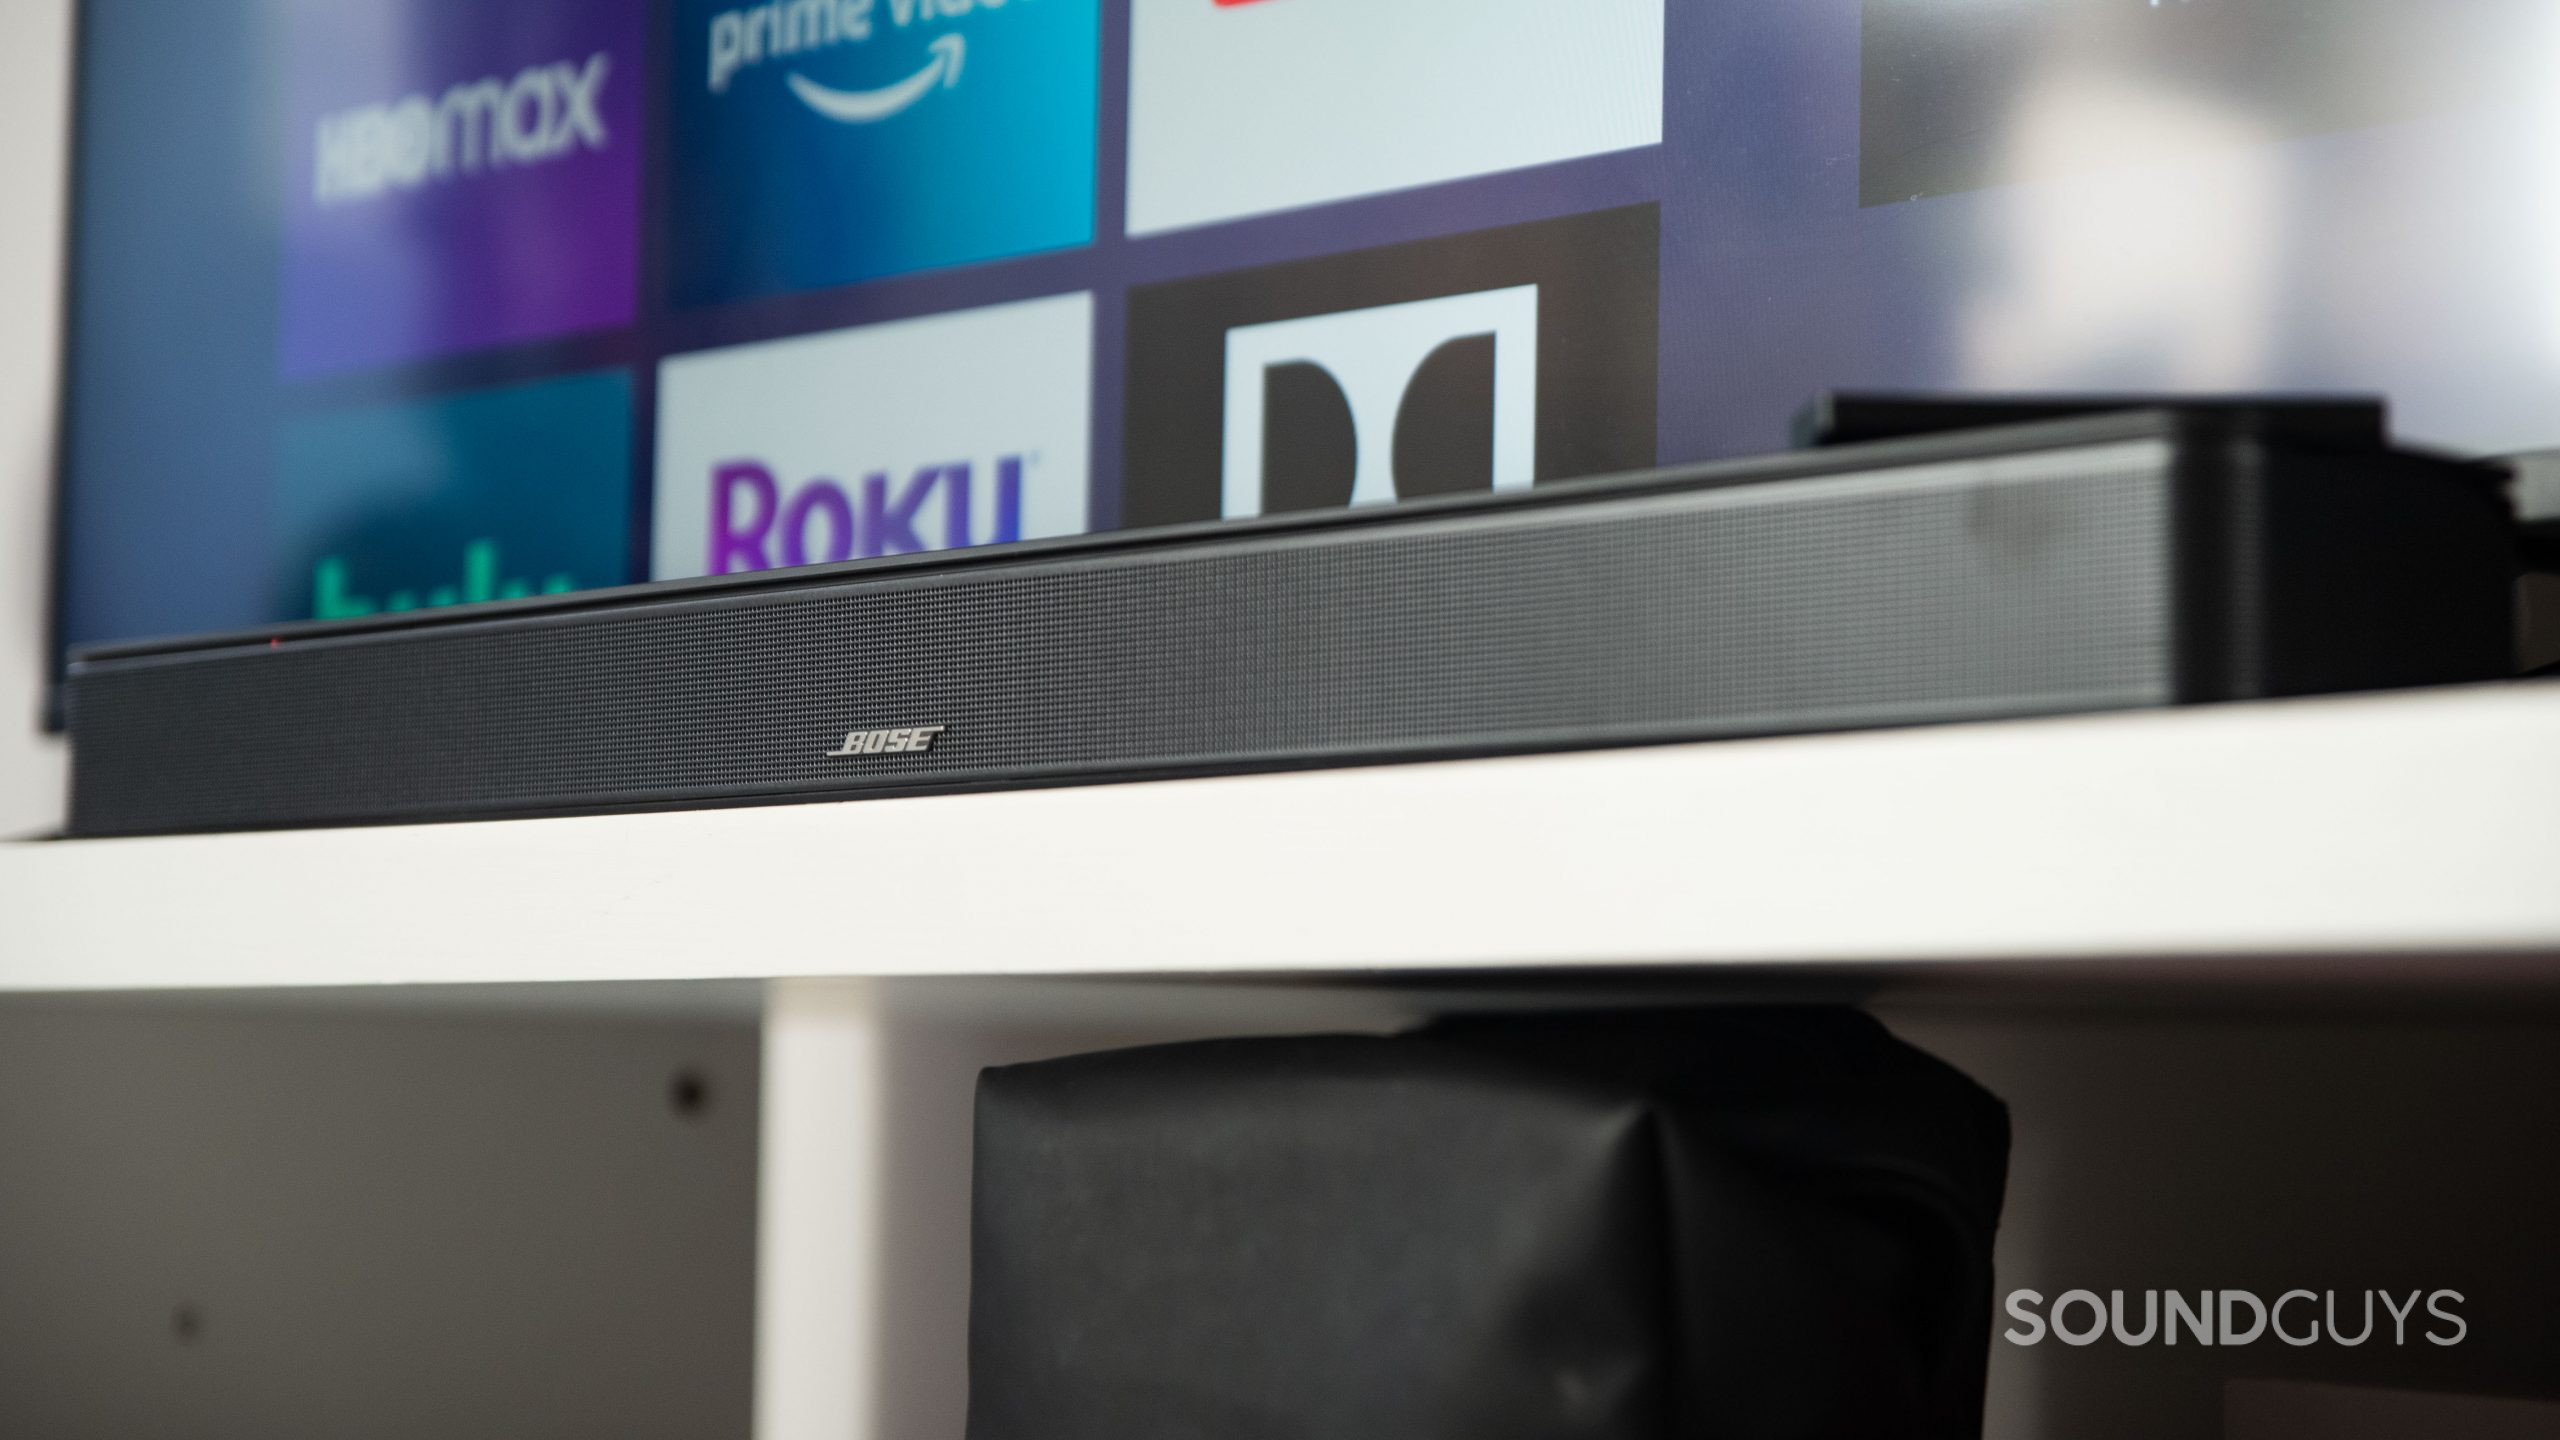 The Bose Smart Soundbar 600 rests on a TV stand beneath a TV.